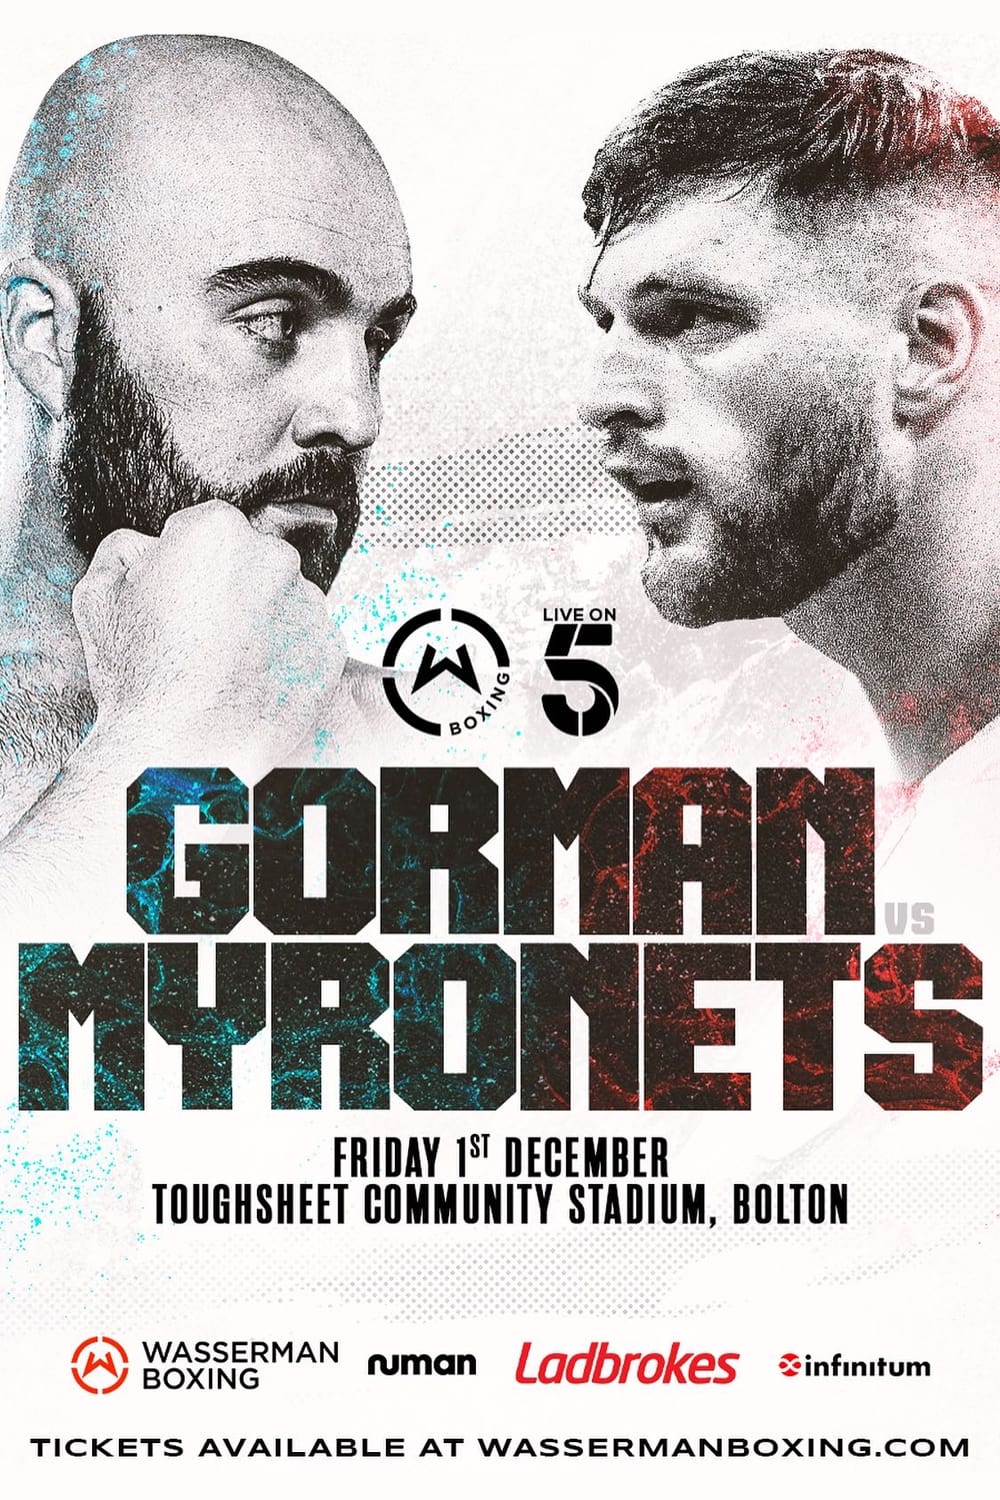 Nathan Gorman vs. Bohdan Myronets